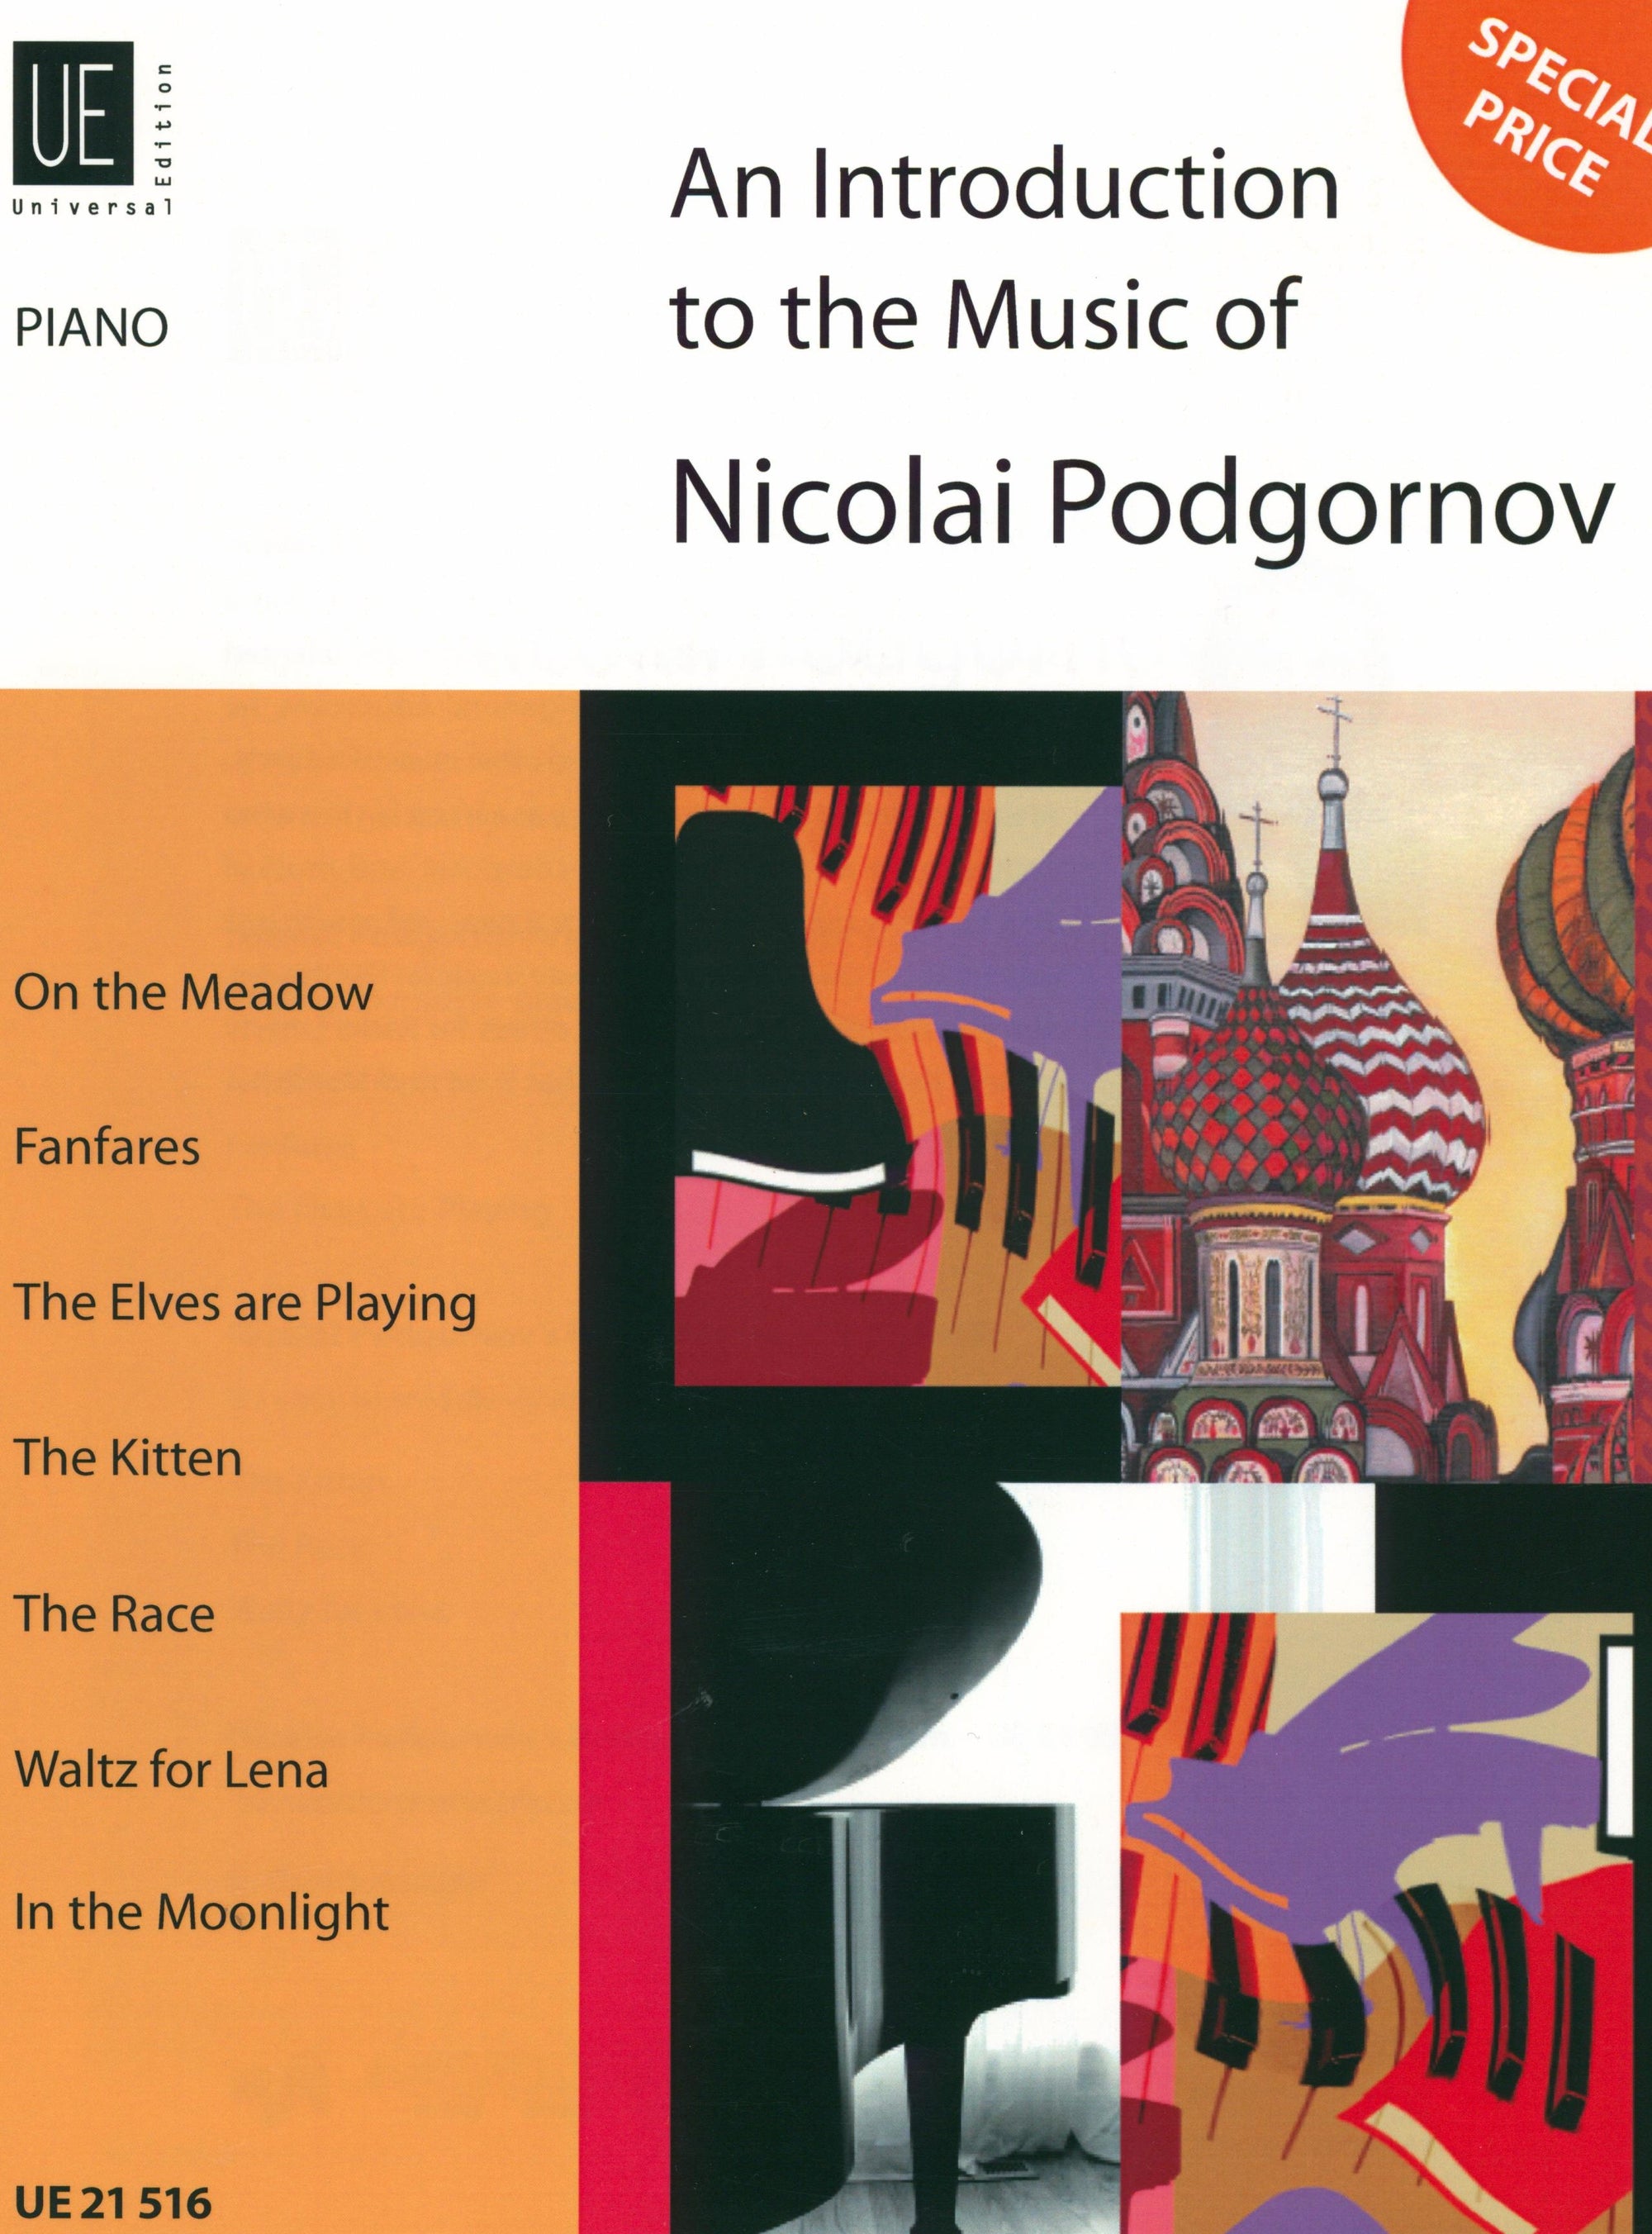 An Introduction to the Music of Nicoloai Podgornov